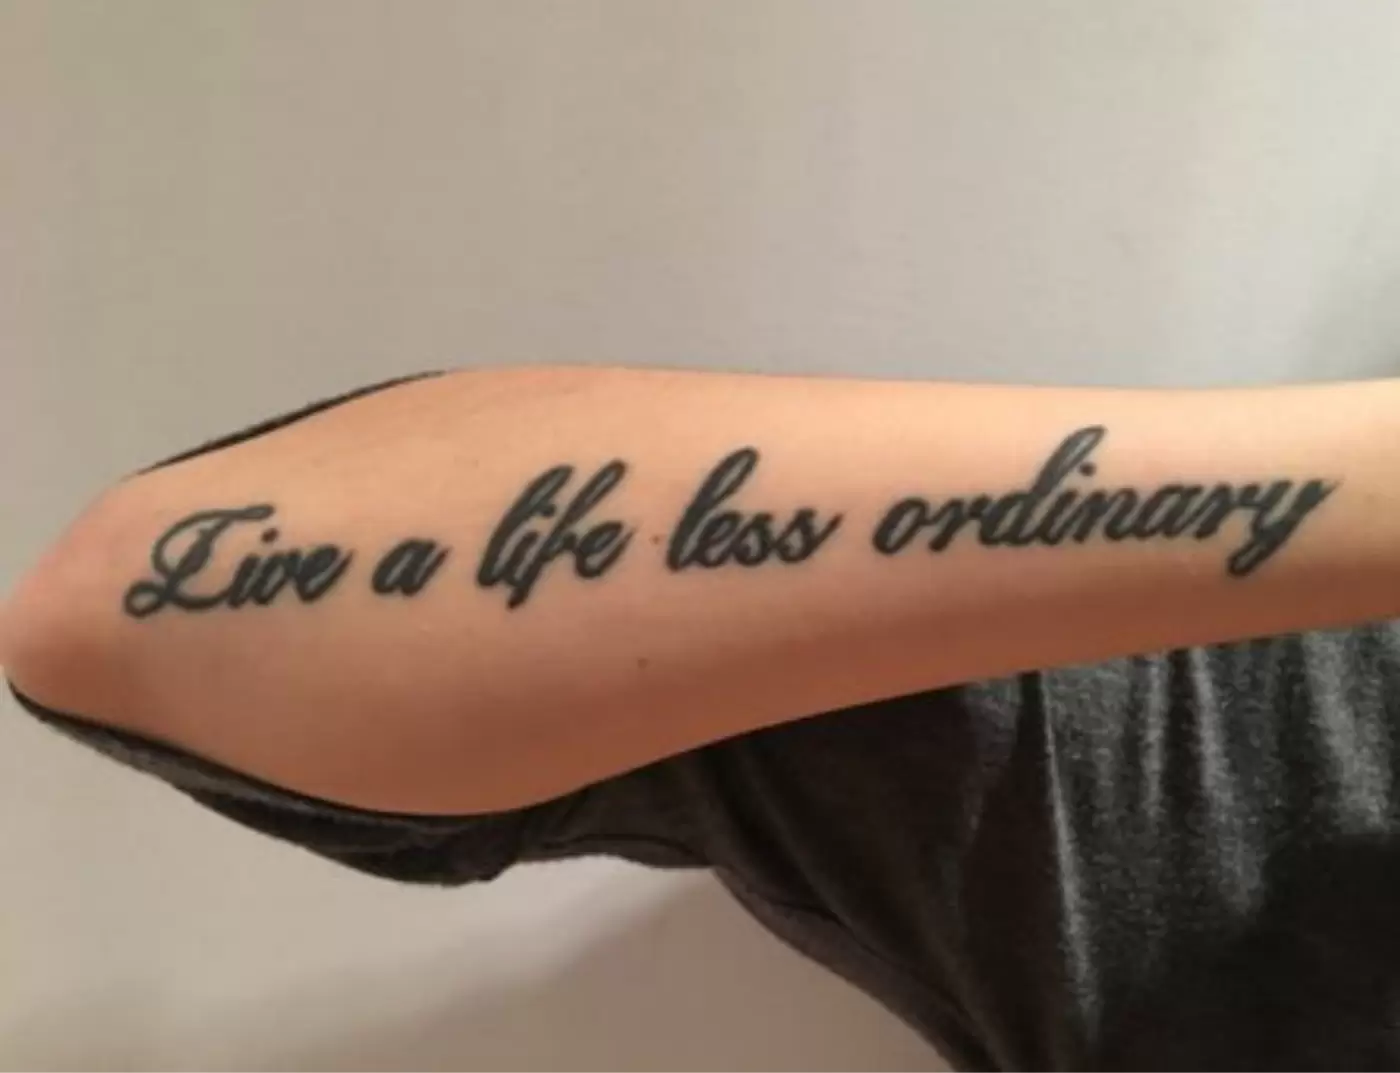 Live a life less ordinary tattoo